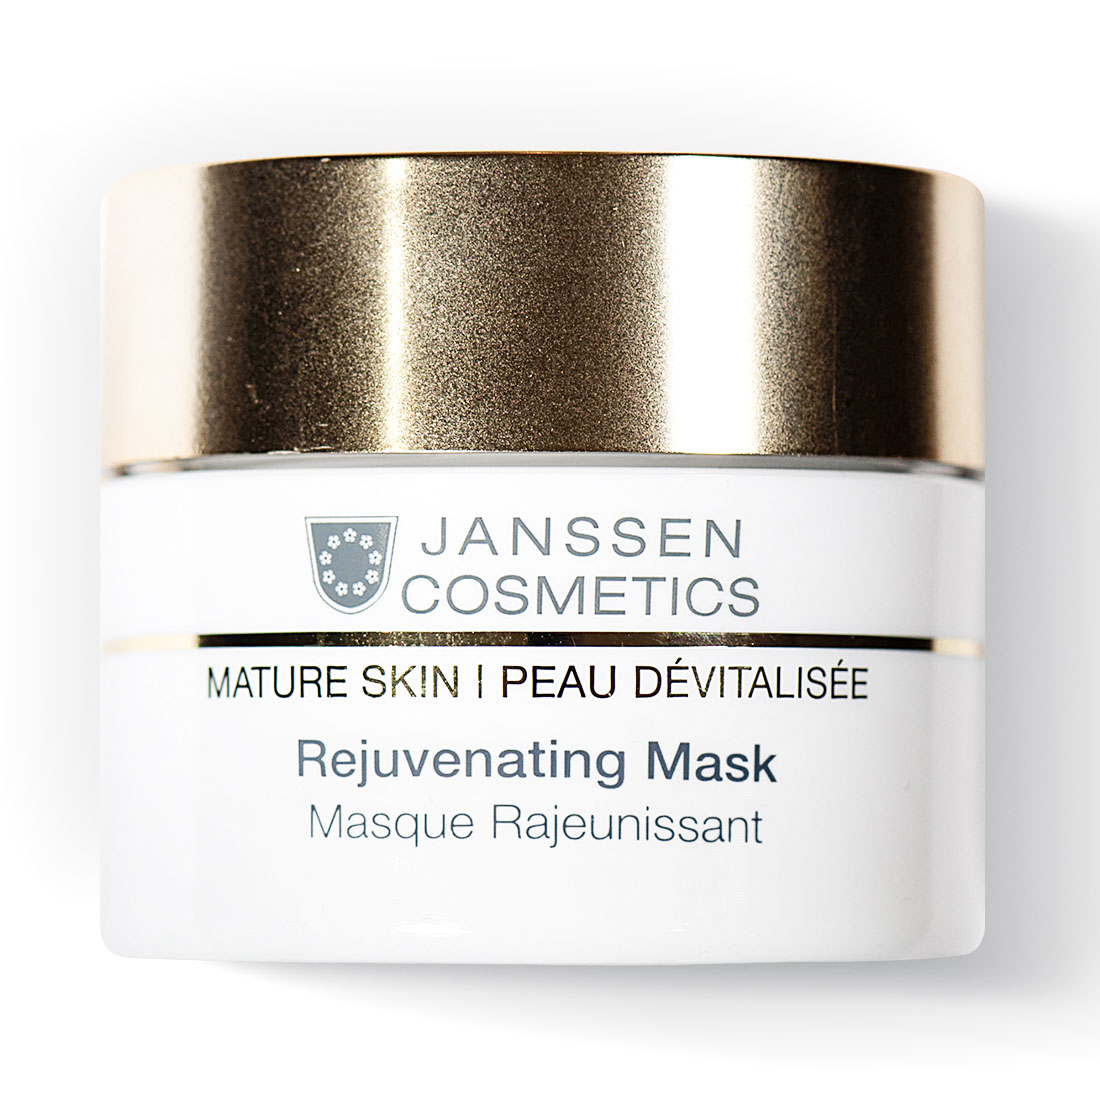 Janssen Cosmetics Омолаживающая крем-маска Rejuvenating Mask, 50 мл (Janssen Cosmetics, Mature Skin) janssen cosmetics rejuvenating mask